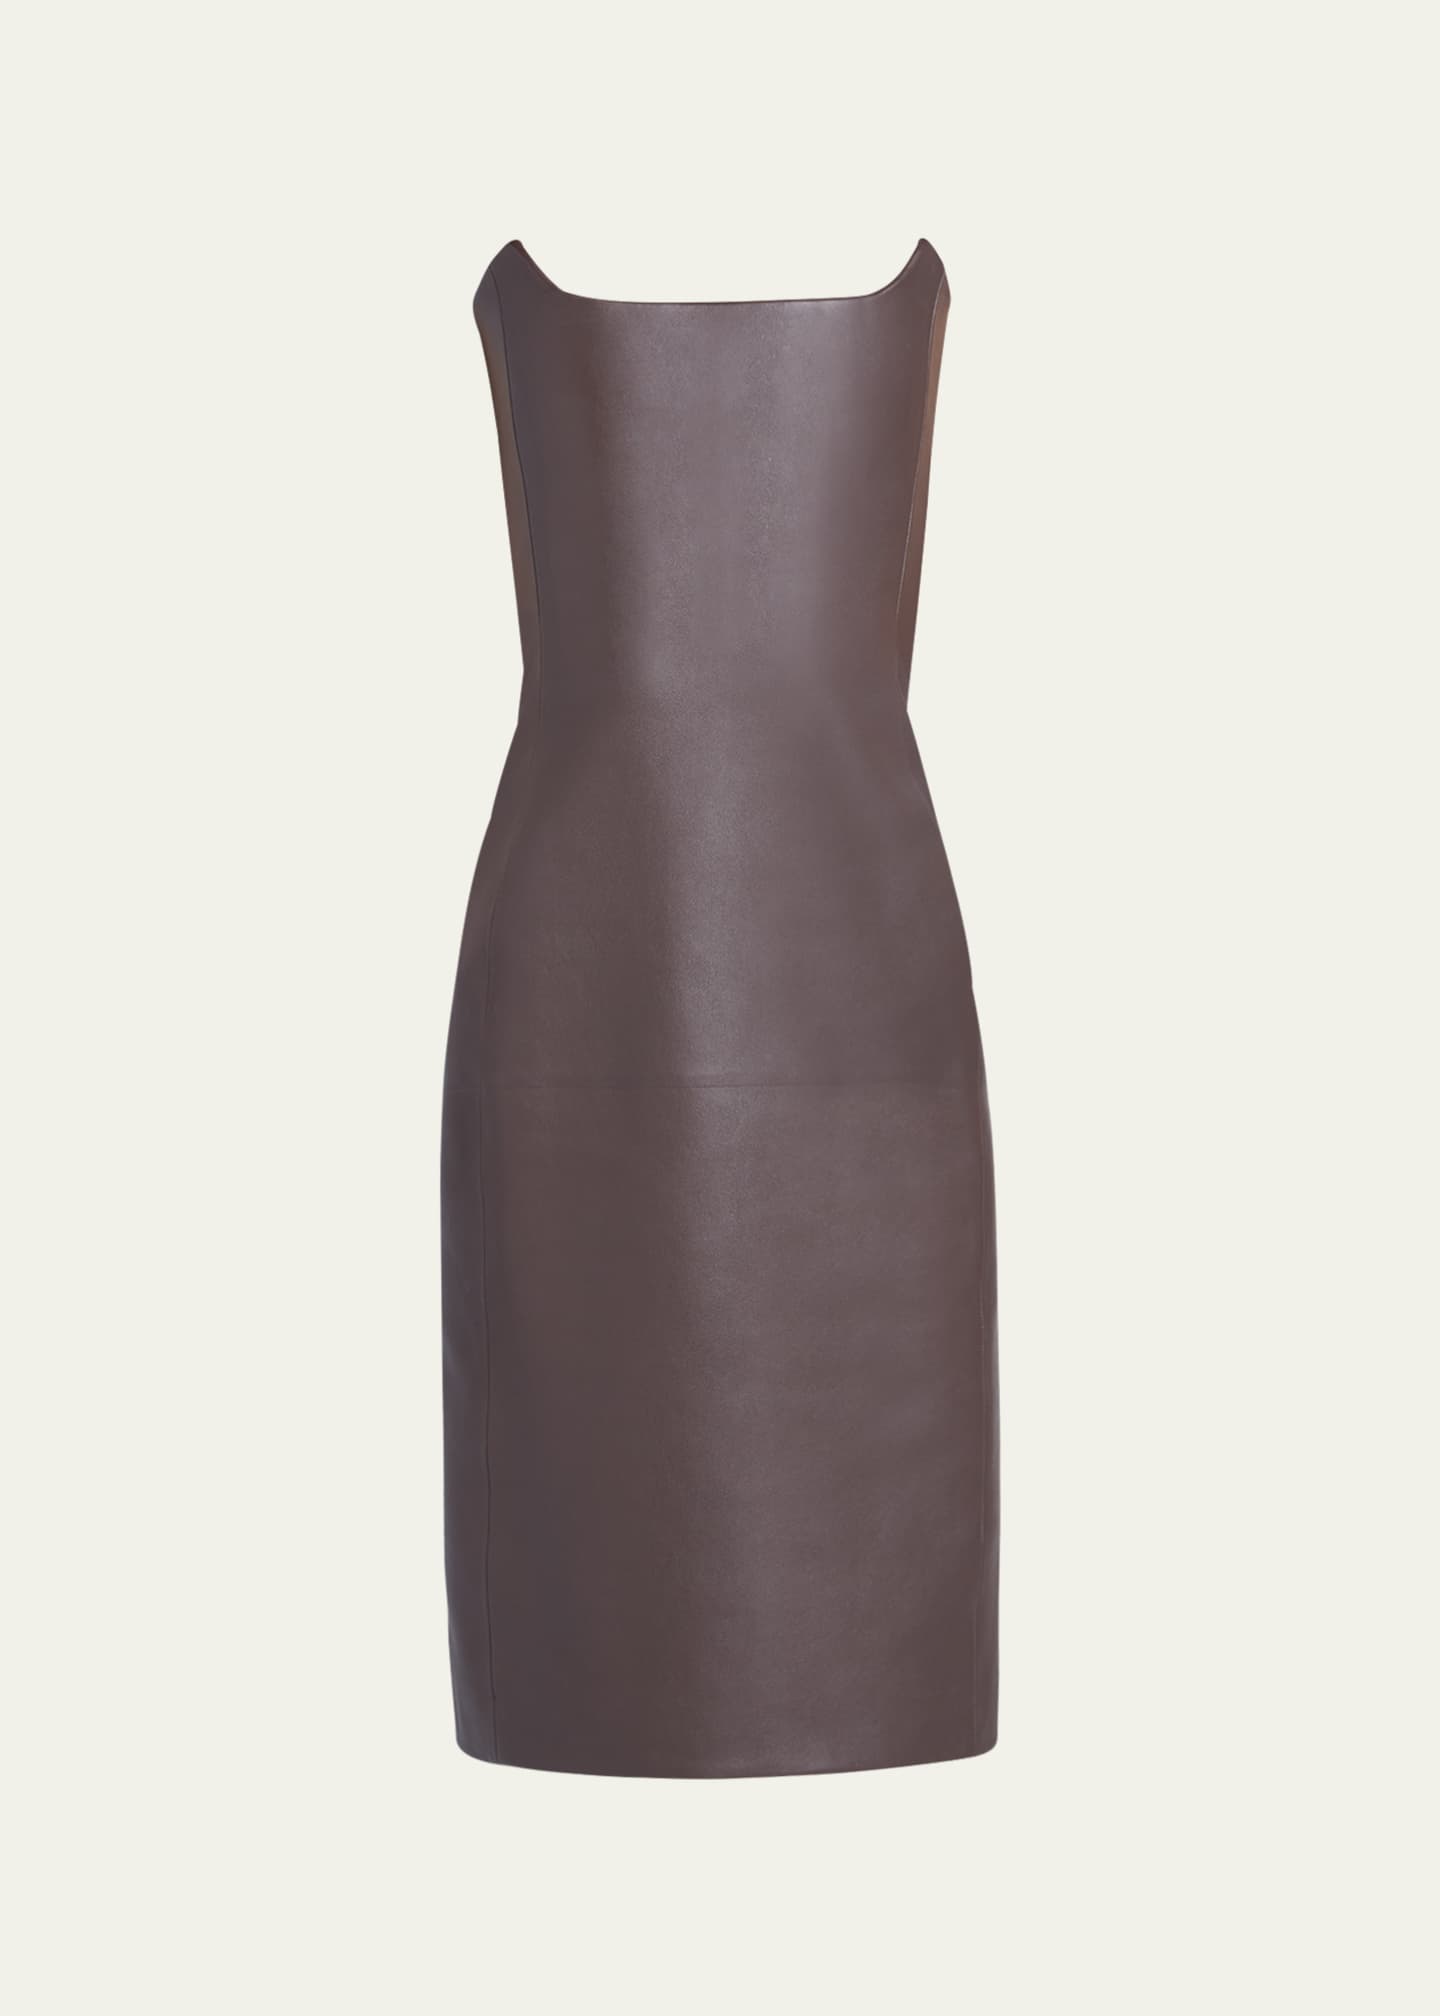 Bottega Veneta Cashmere-Blend Leather Strapless Midi Dress Image 1 of 5